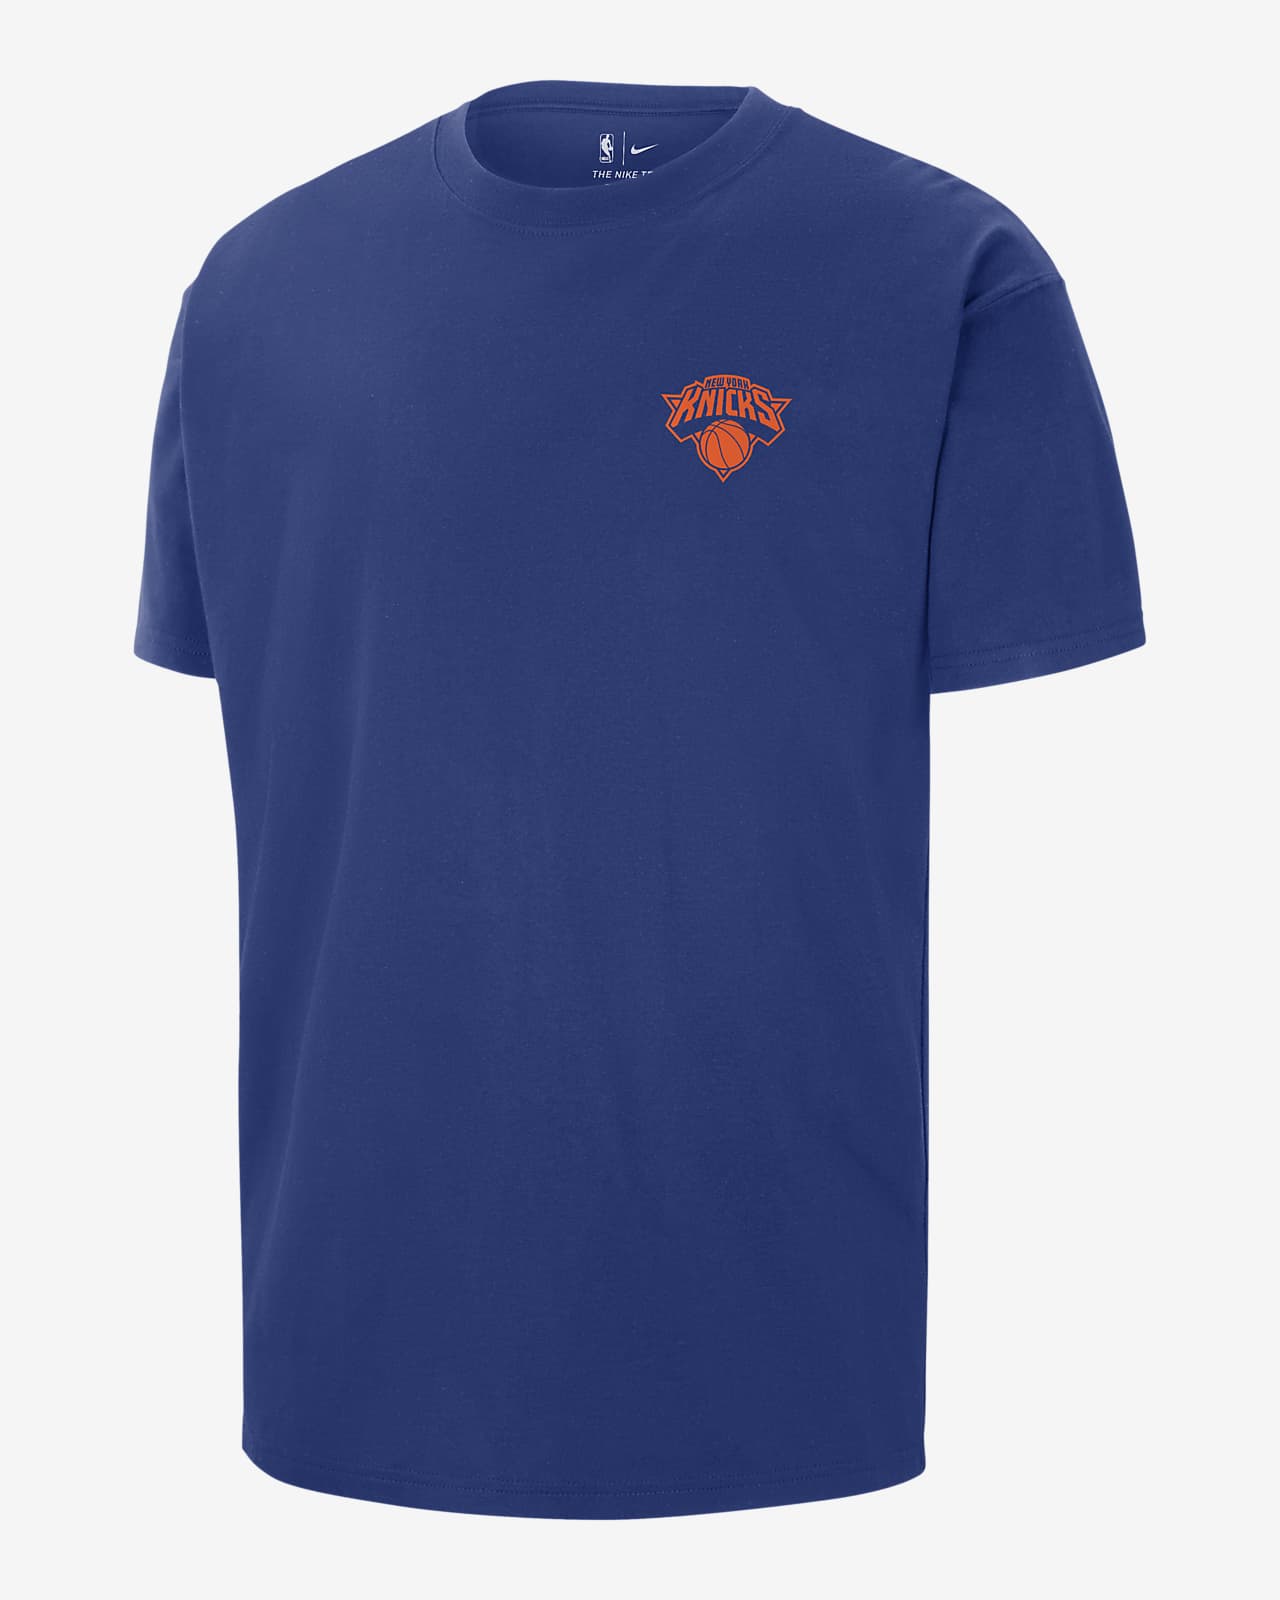 New York Knicks Men's Nike NBA Max90 T-Shirt.